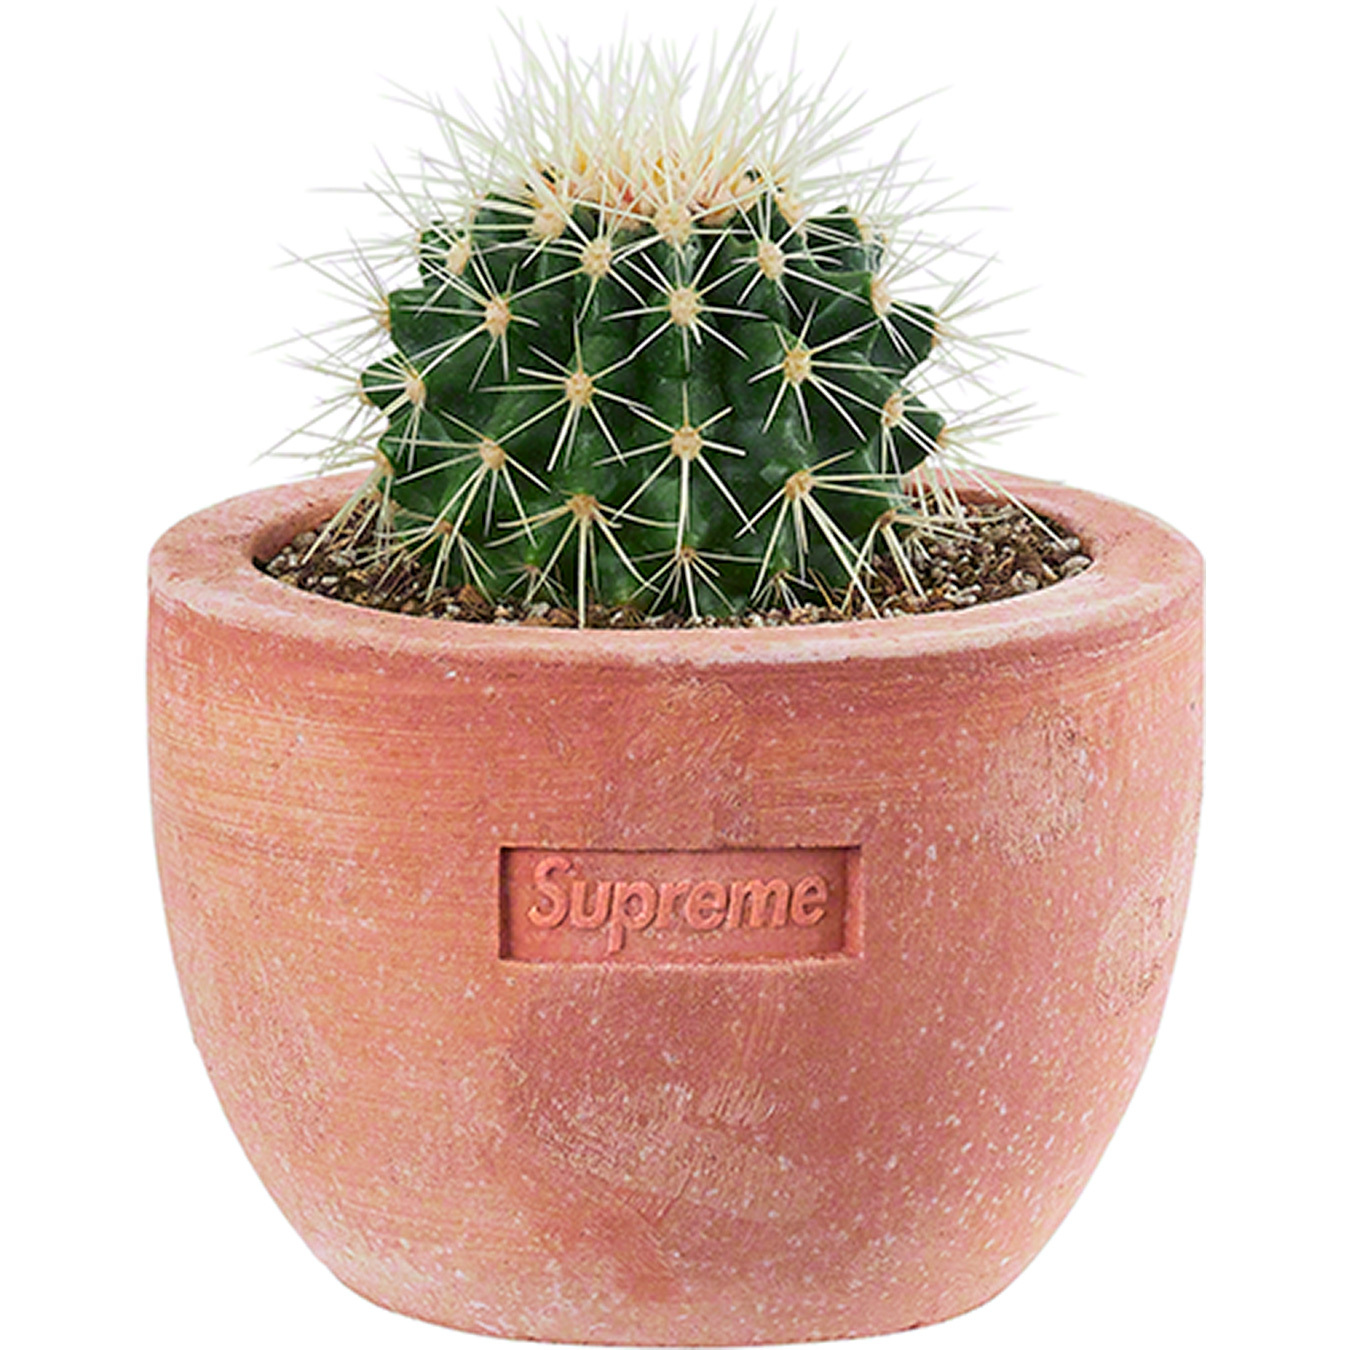 Supreme®/Poggi Ugo Small Planter